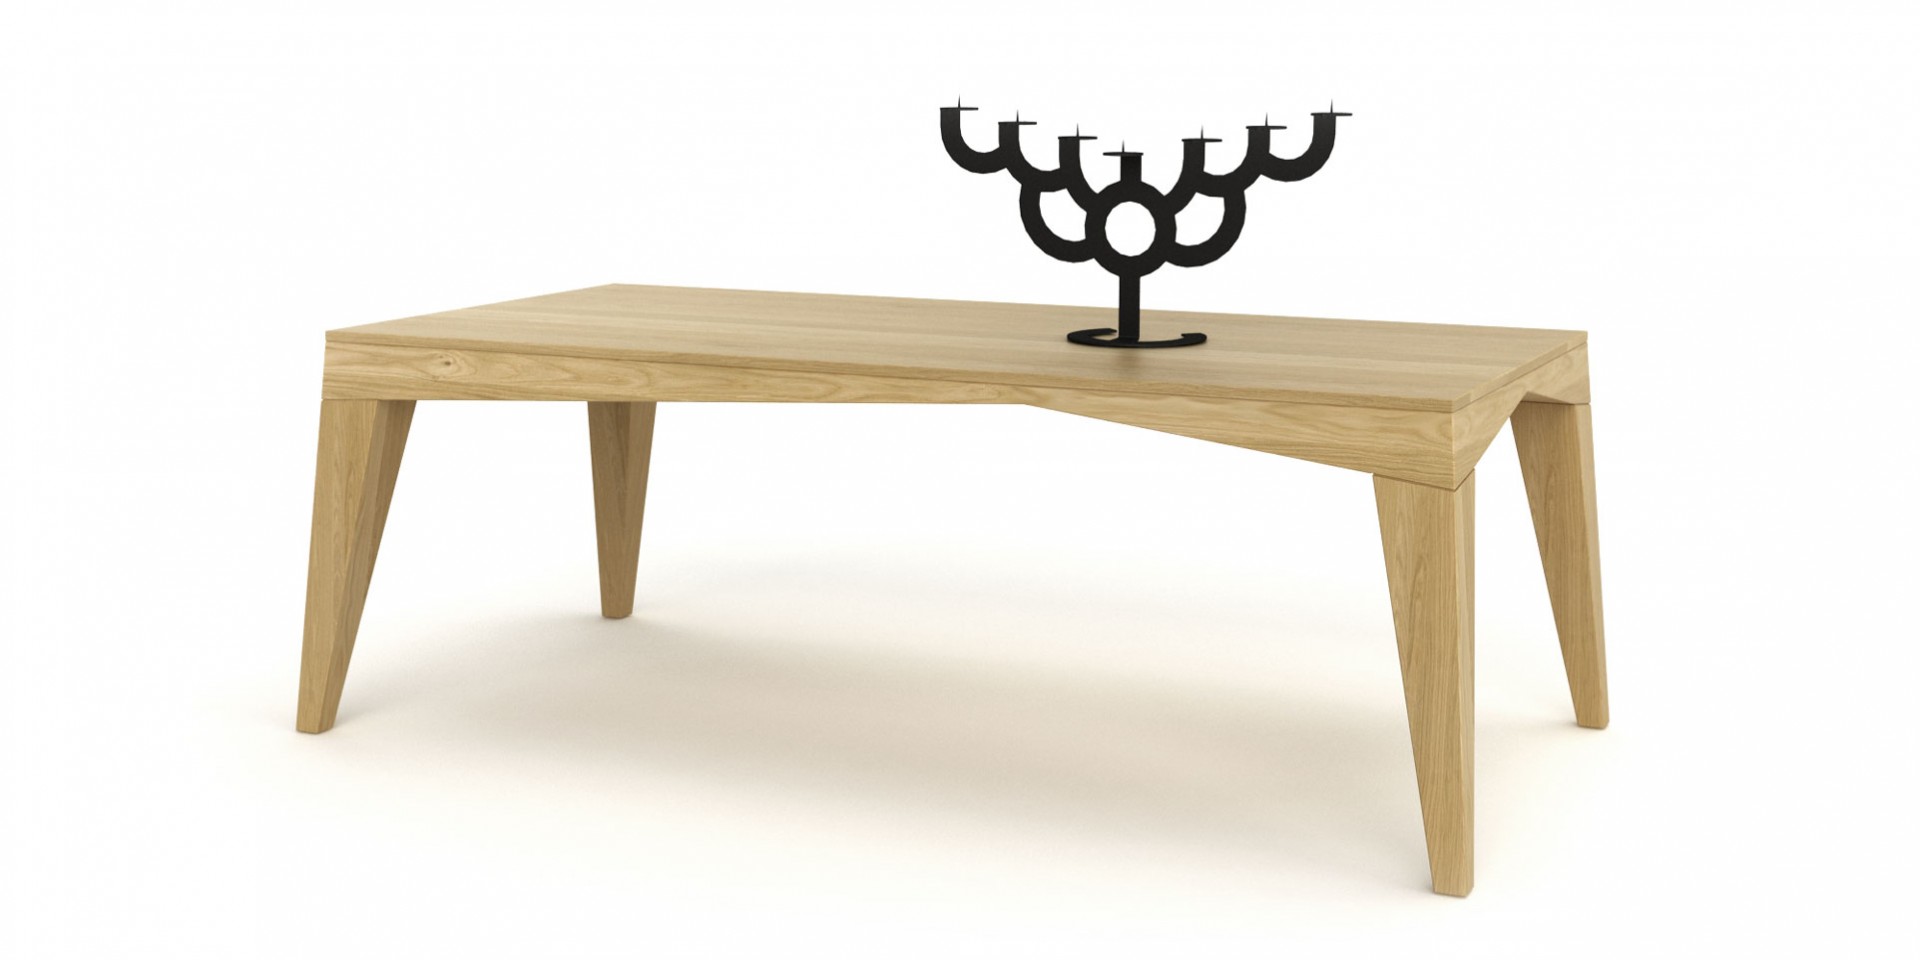 Jedálenský stôl ROCK, masívny dub, jedálenský stôl z masívneho dreva, masívny dubový stôl, masívny drevený stôl cubica, moderný dubový stôl